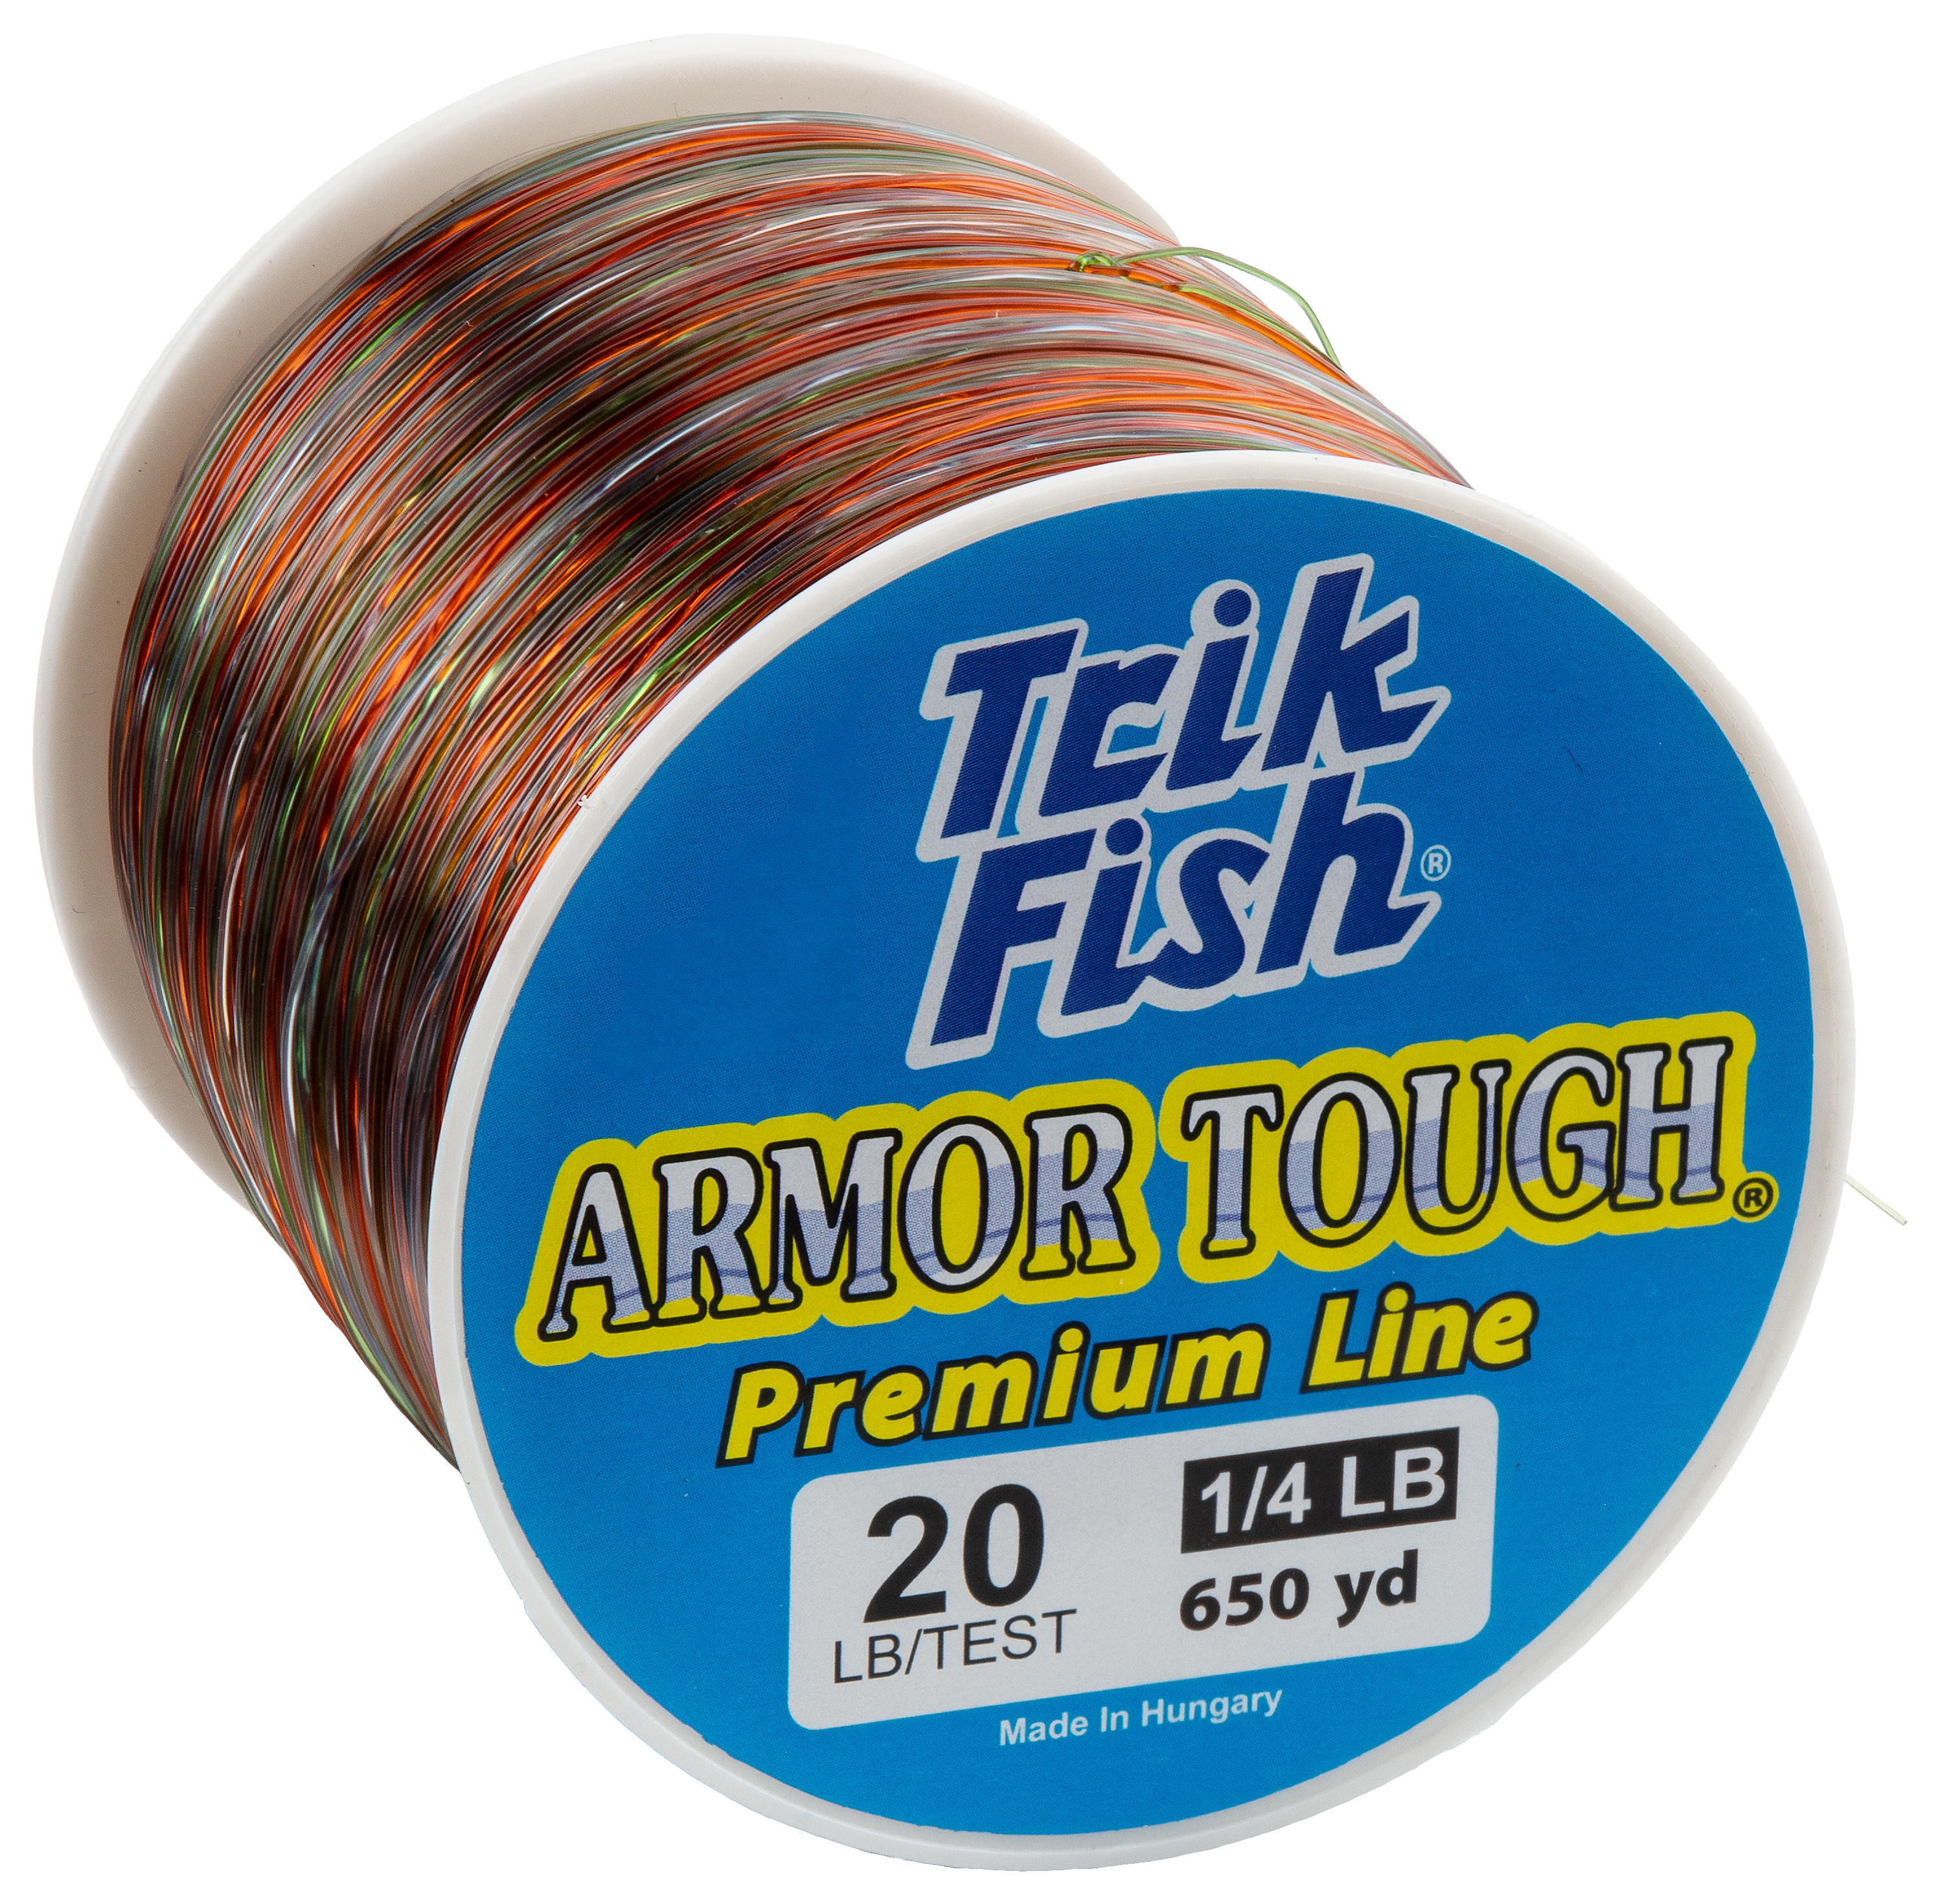 Trik Fish Armor Tough Premium Monofilament Line